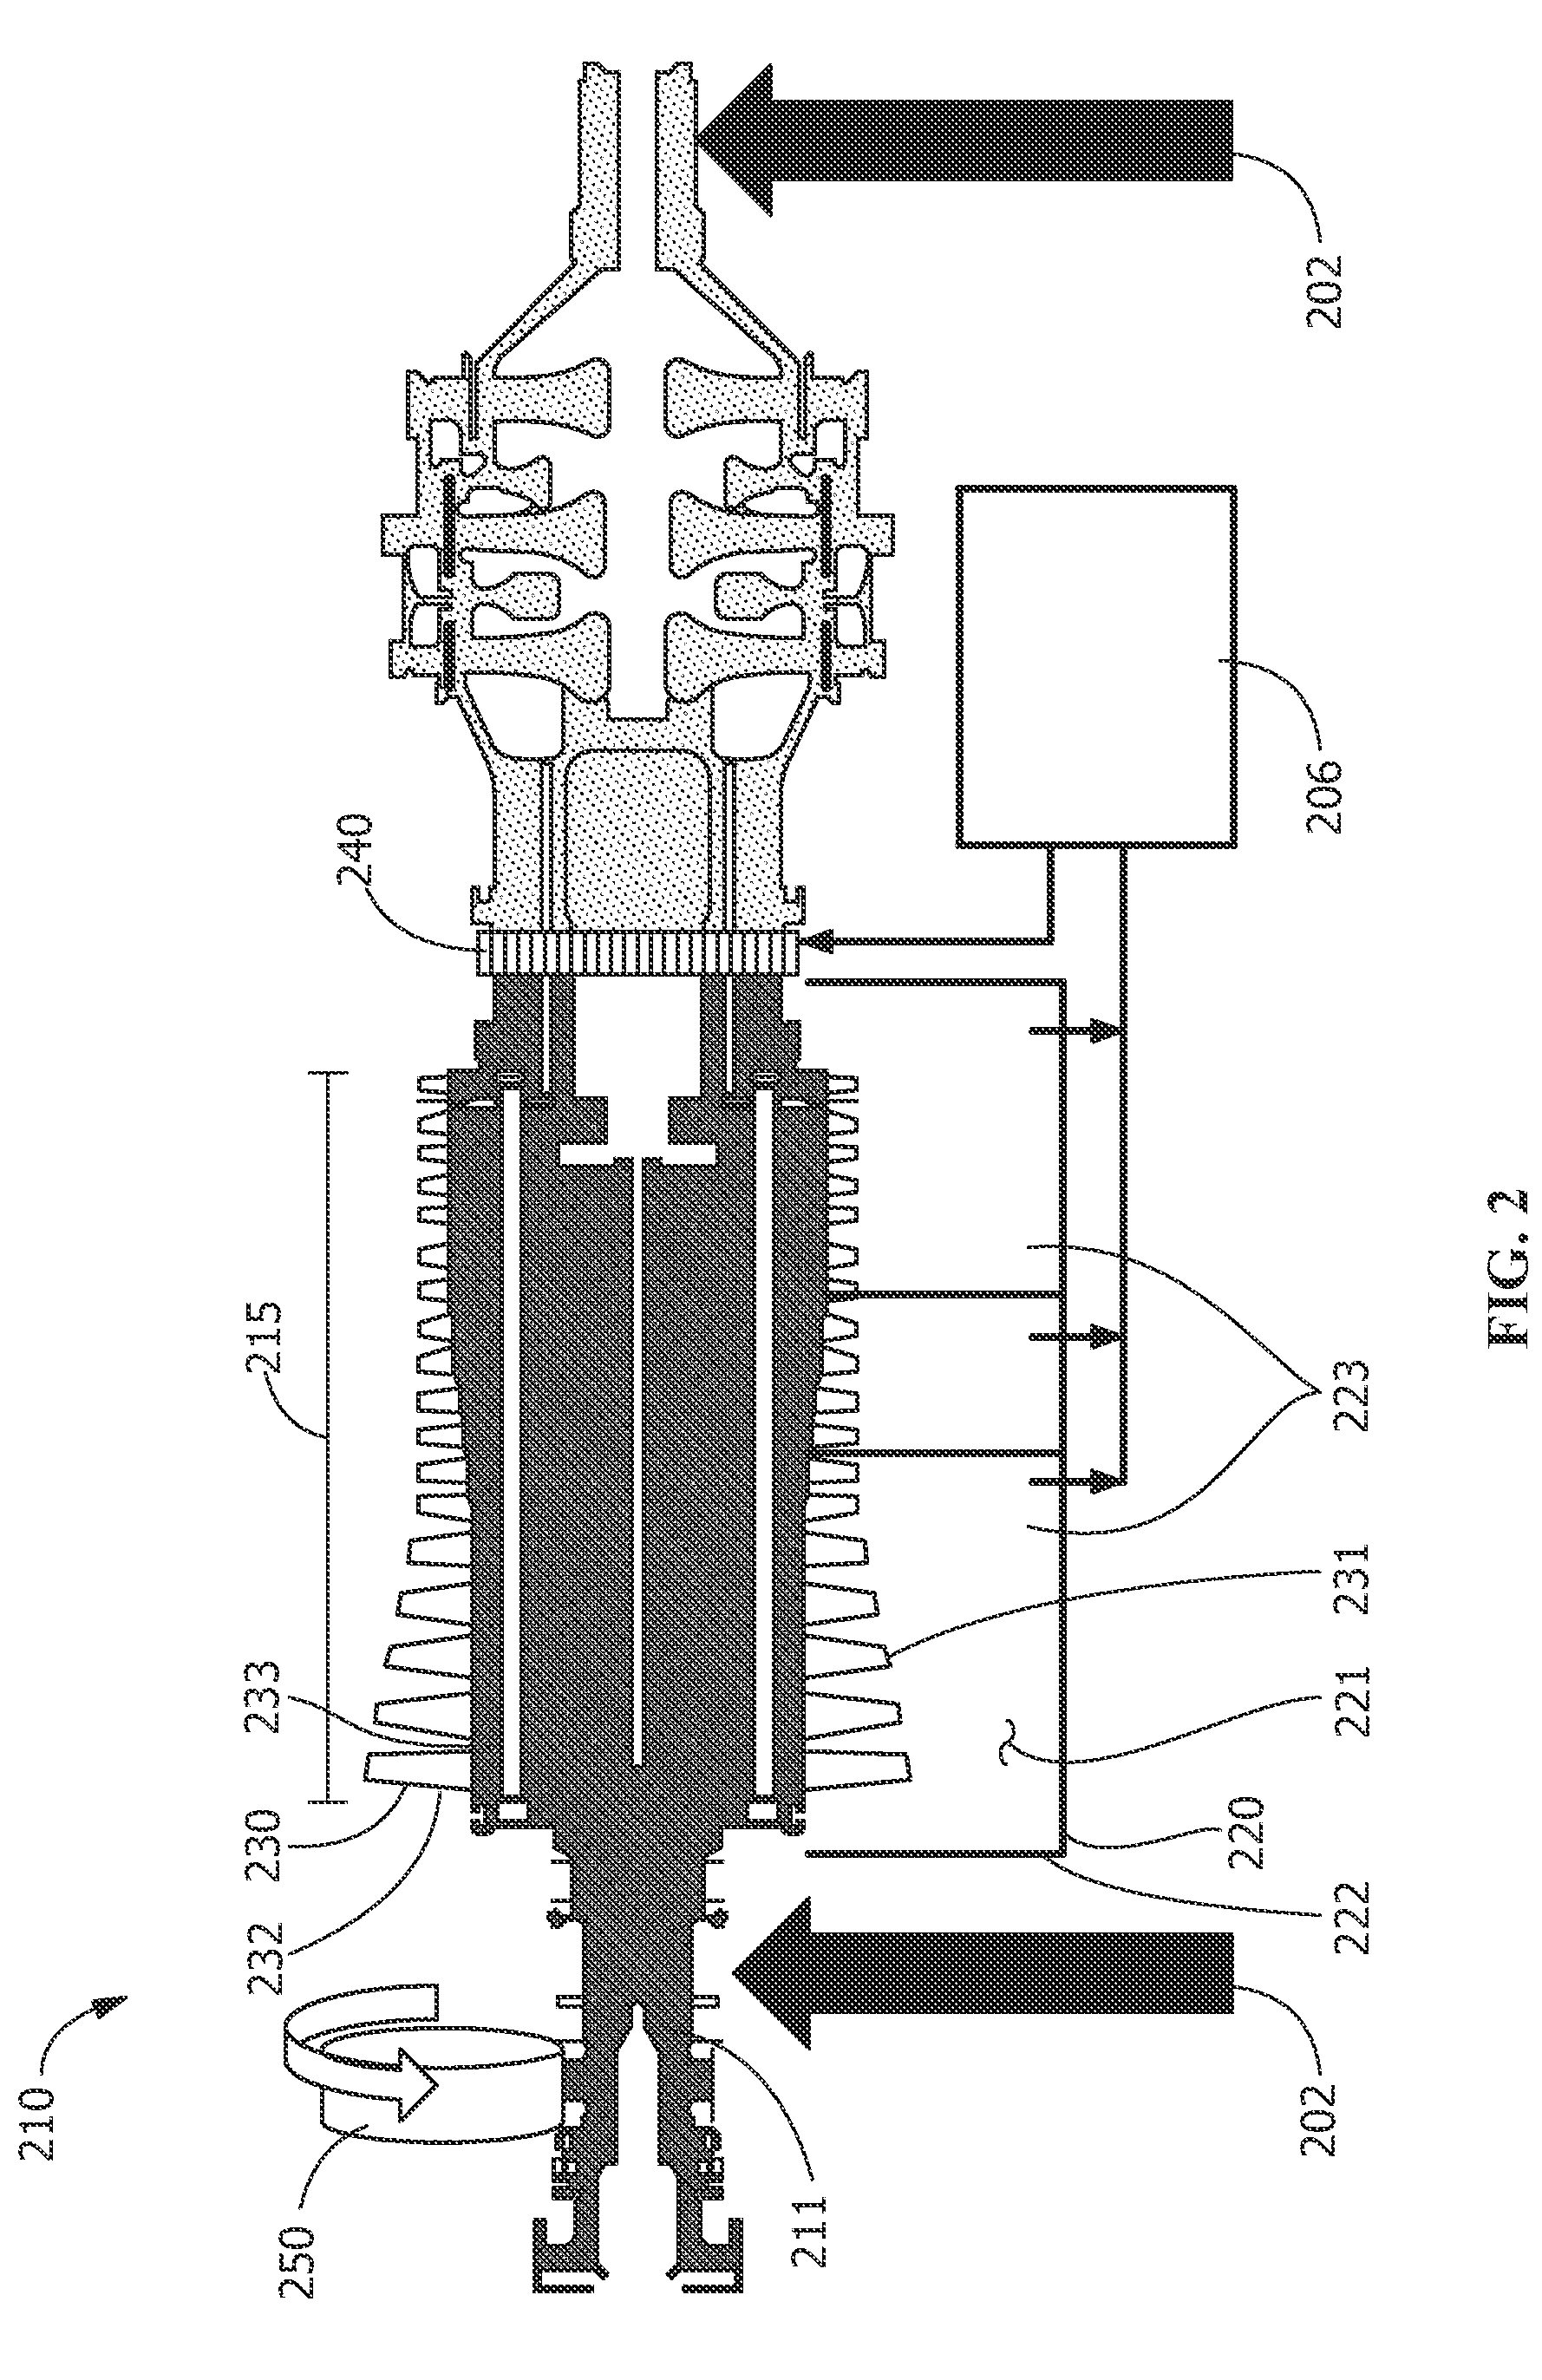 Method and apparatus for refurbishing turbine components